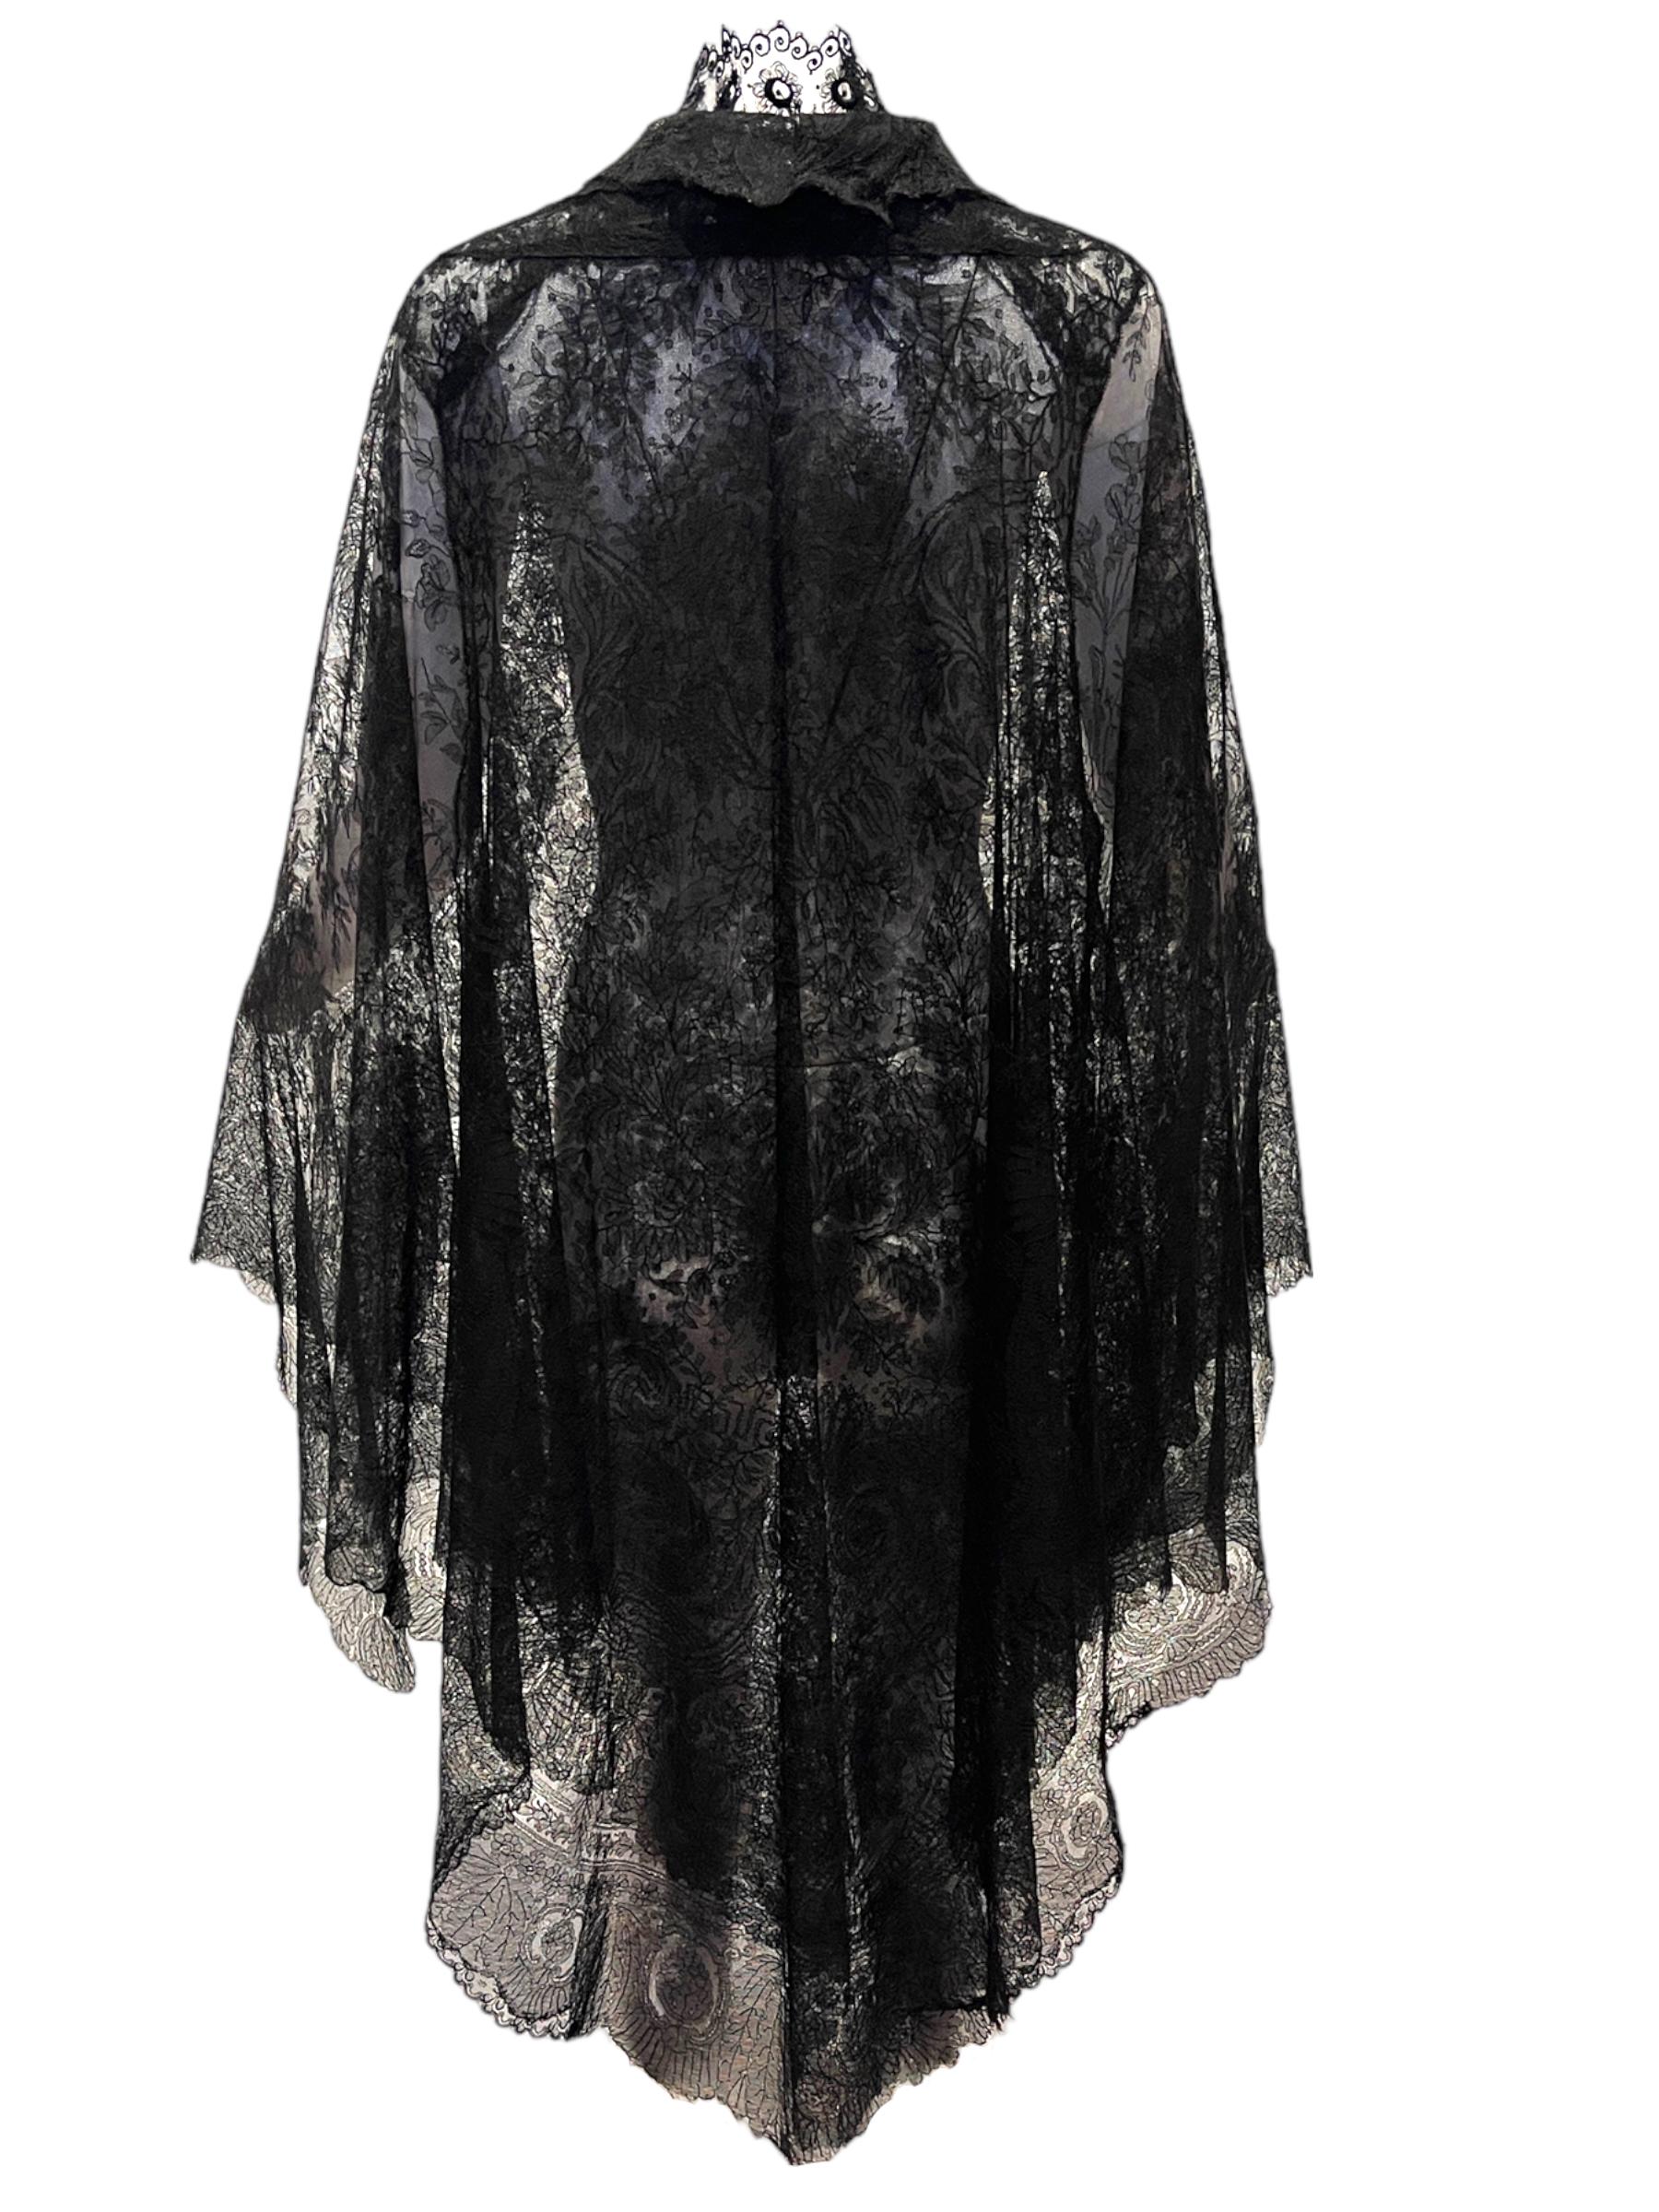 Women's MORPHEW ATELIER Black Antique Silk Chantilly Lace Caped Duster For Sale